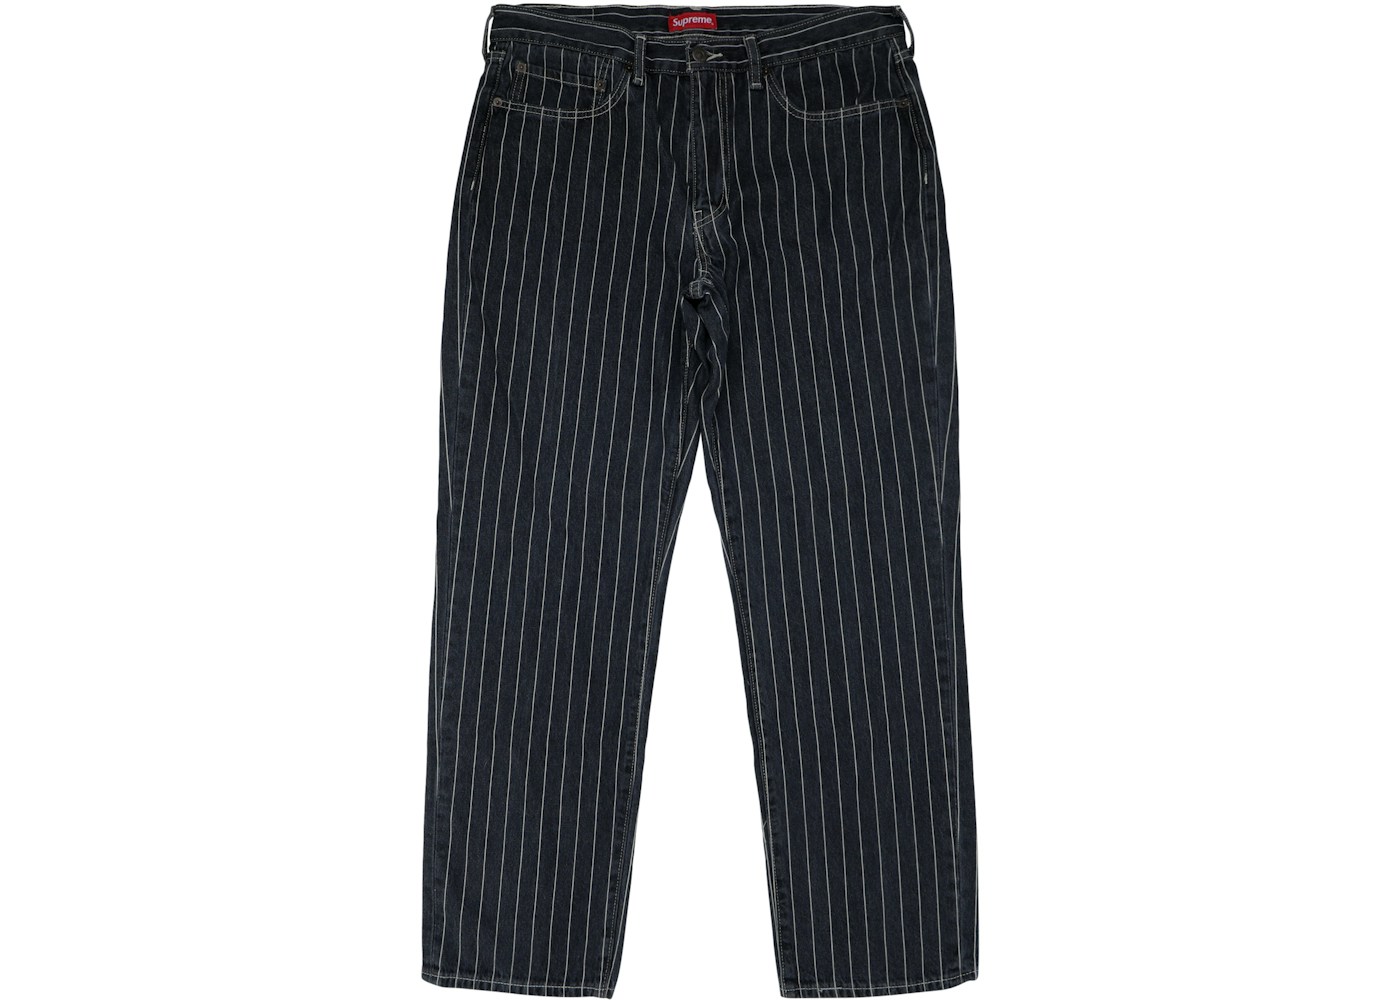 Supreme Levi's Pinstripe 550 Jeans Black - SS18